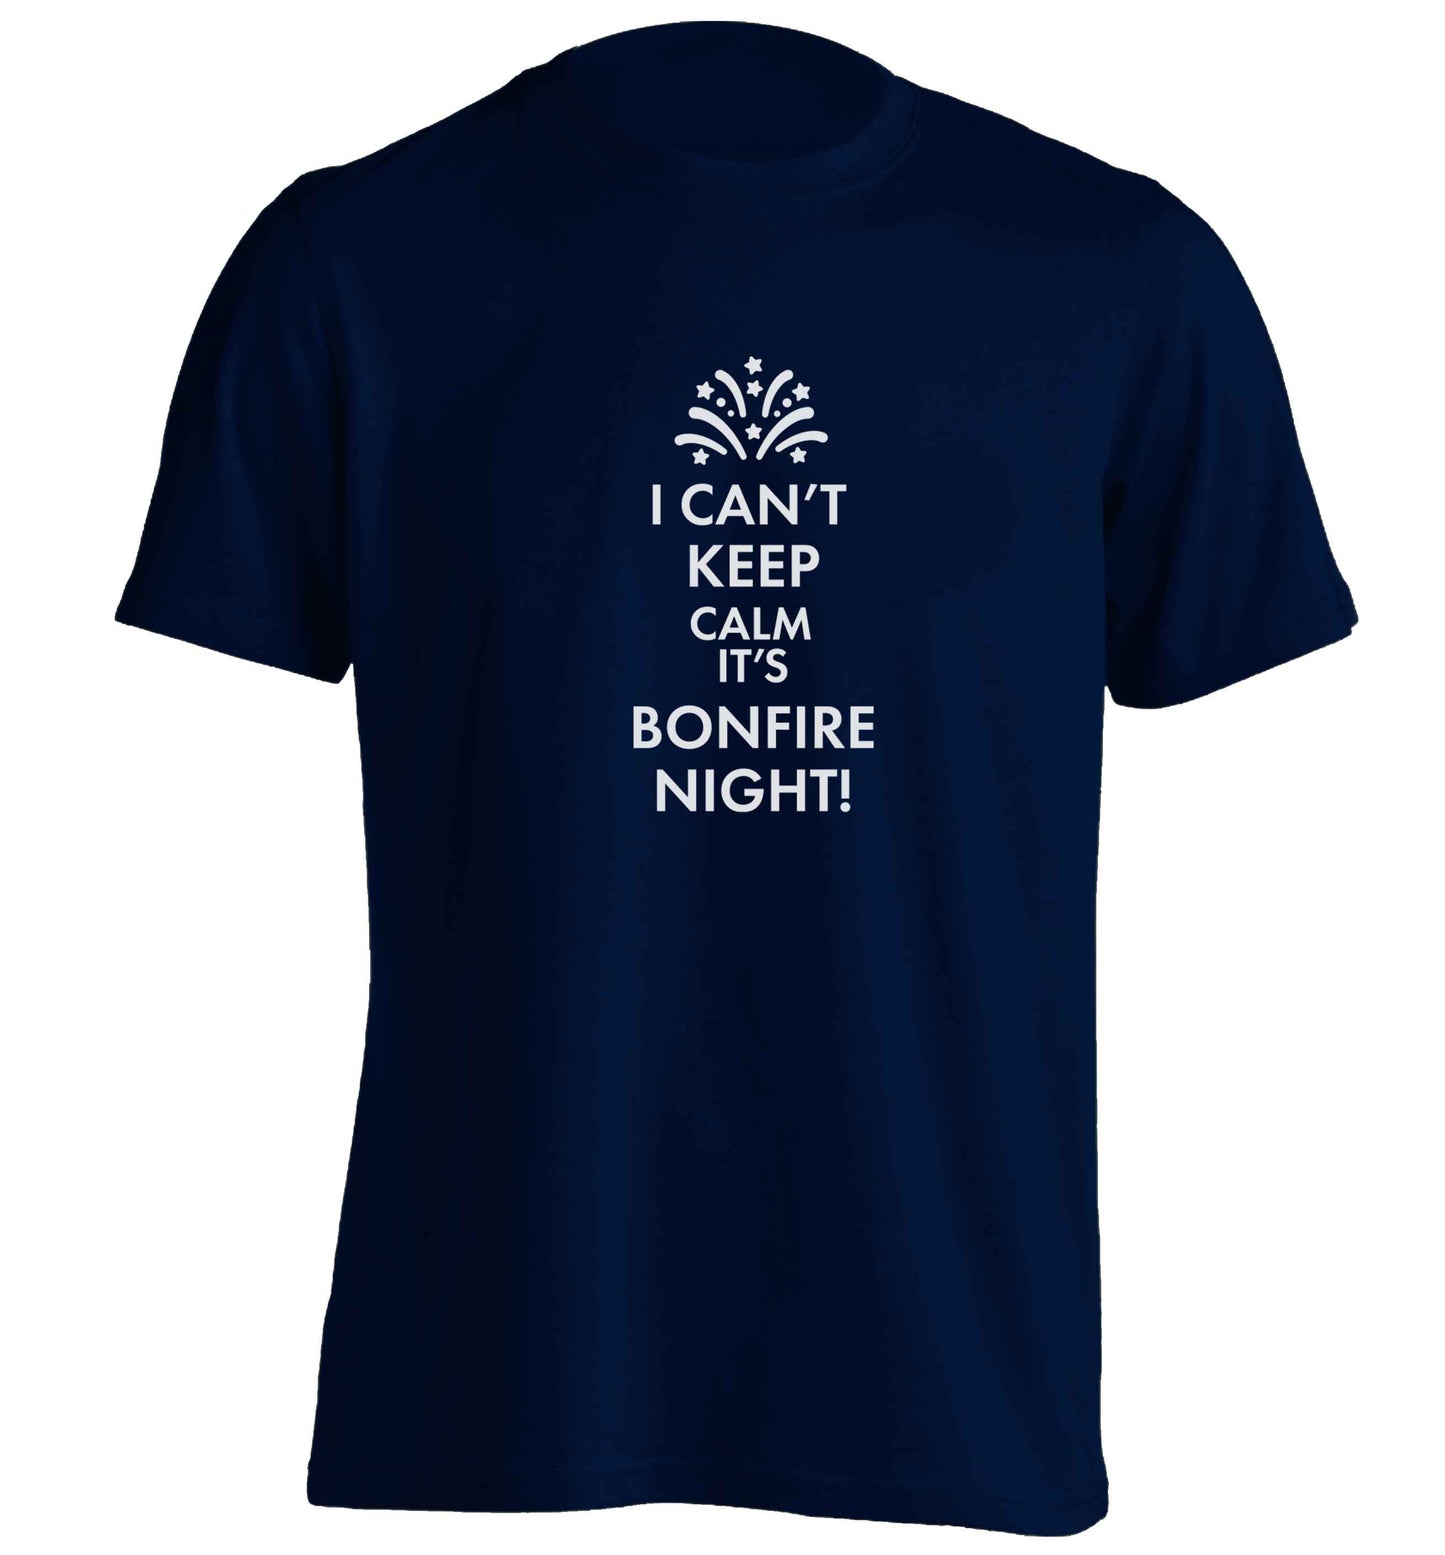 I can't keep calm its bonfire night adults unisex navy Tshirt 2XL